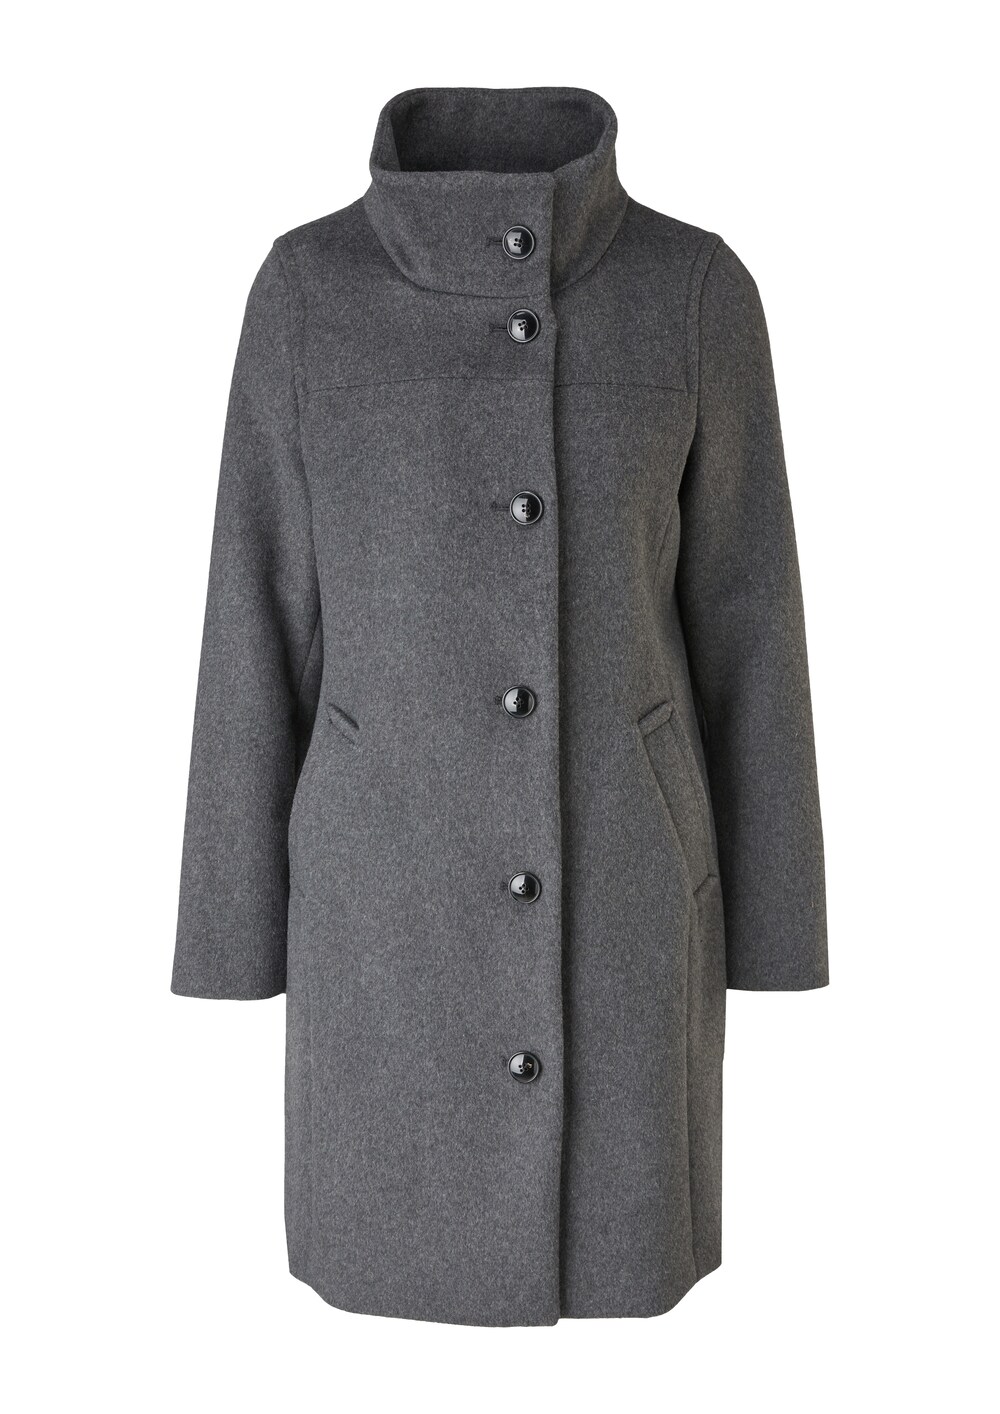 Межсезонное пальто S.Oliver, пестрый серый межсезонное пальто edited ekaterina пестрый серый